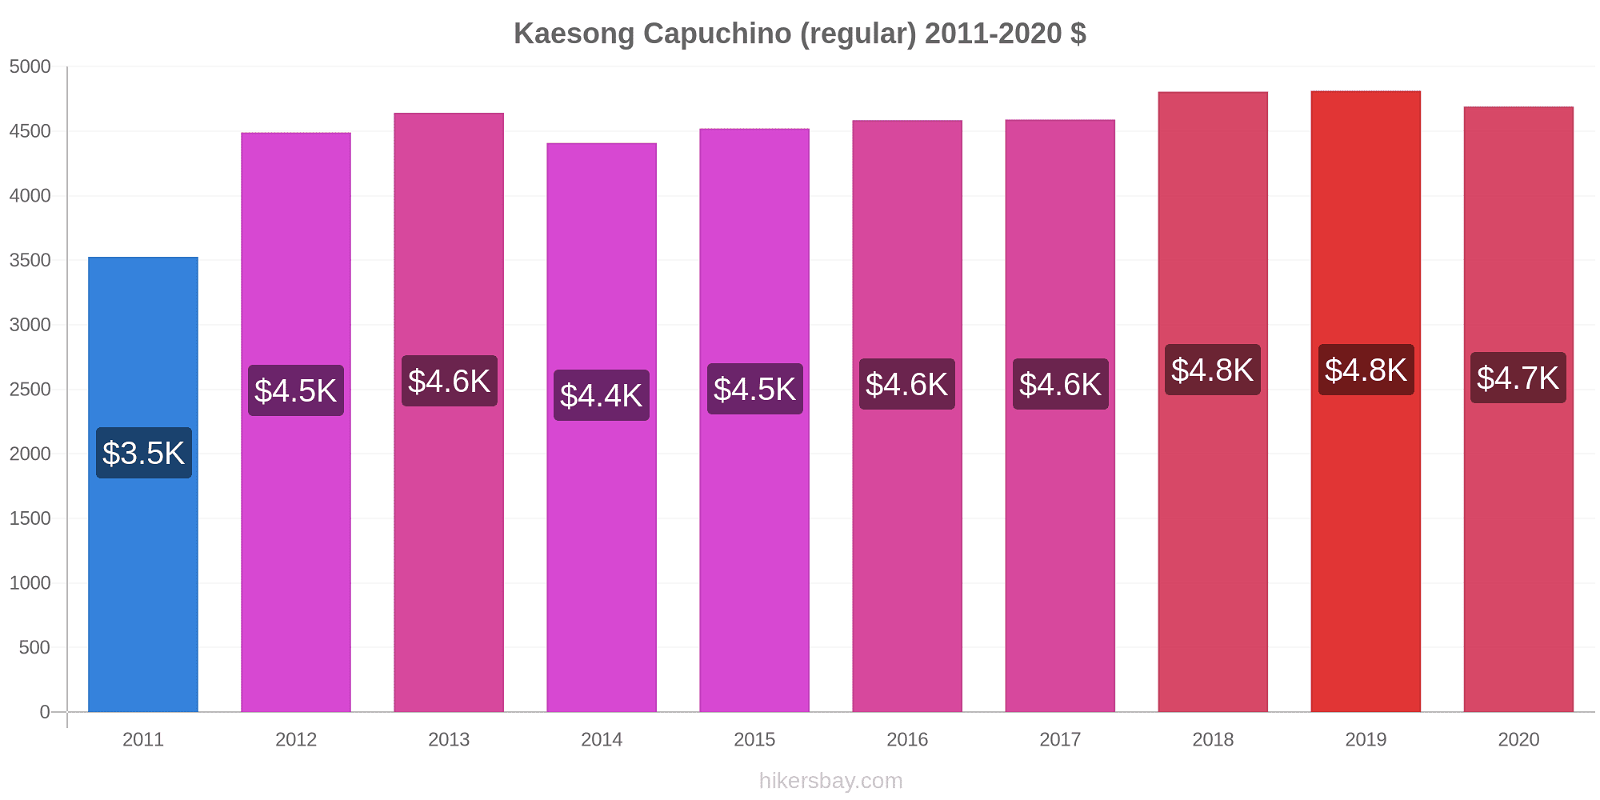 Kaesong cambios de precios Capuchino (regular) hikersbay.com